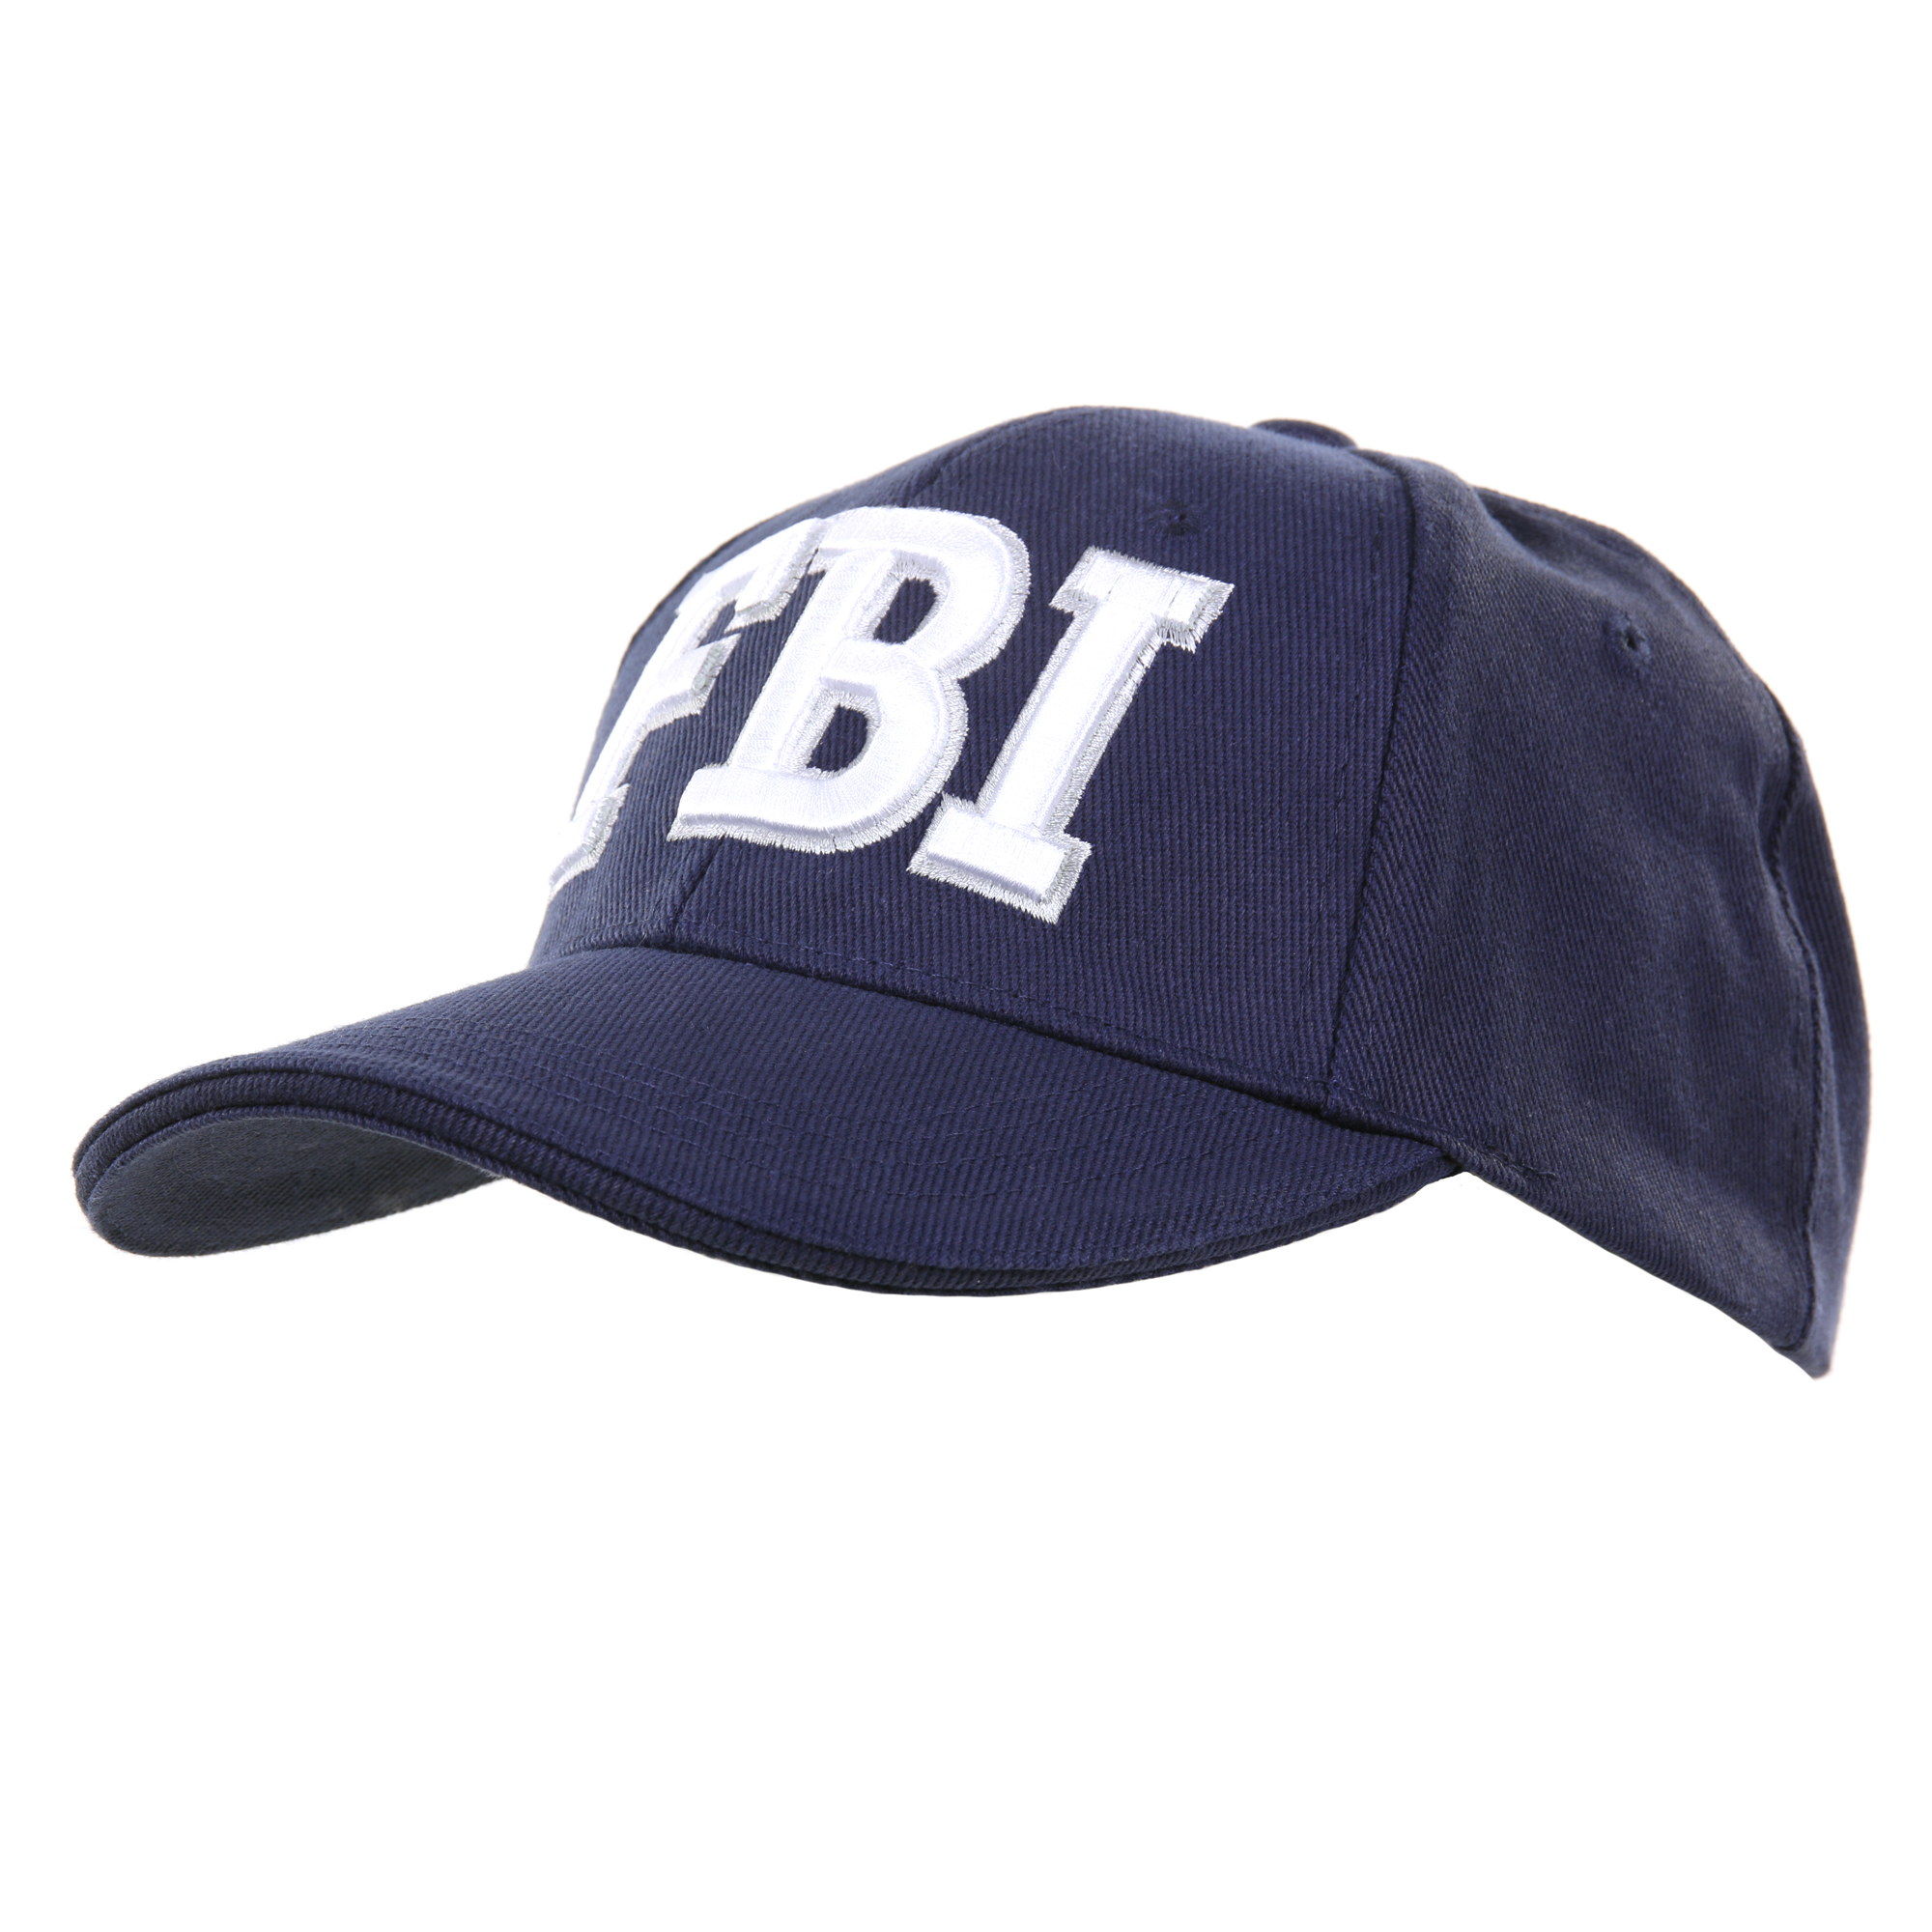 FBI Baseball Cap by Fostex